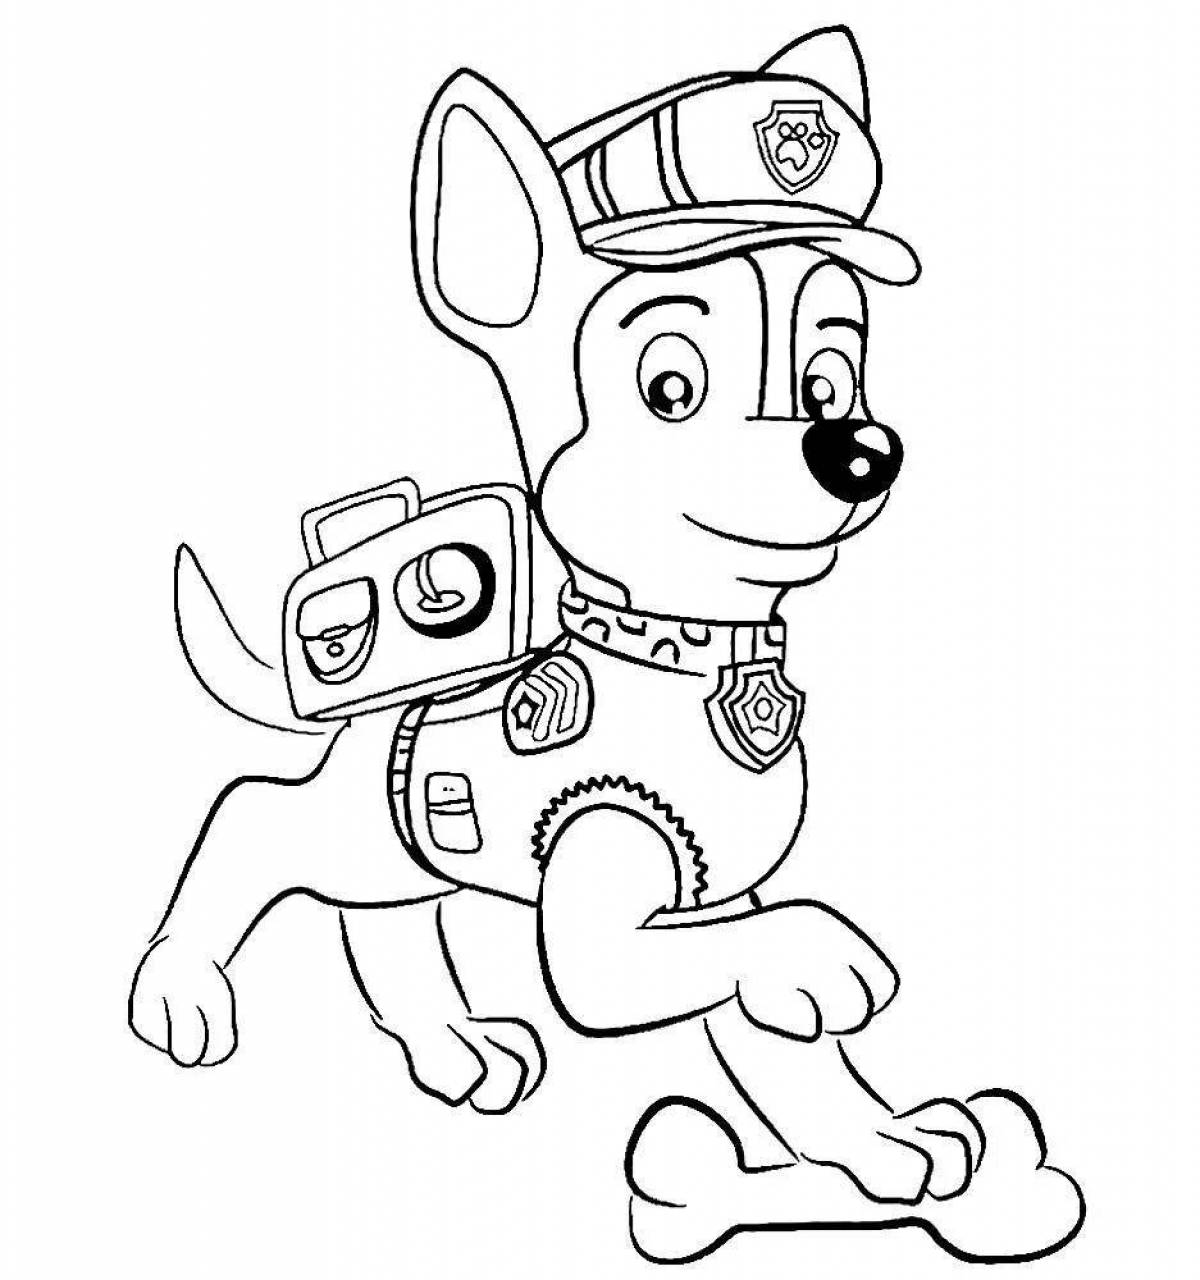 Coloring page cute cartoon paw patrol